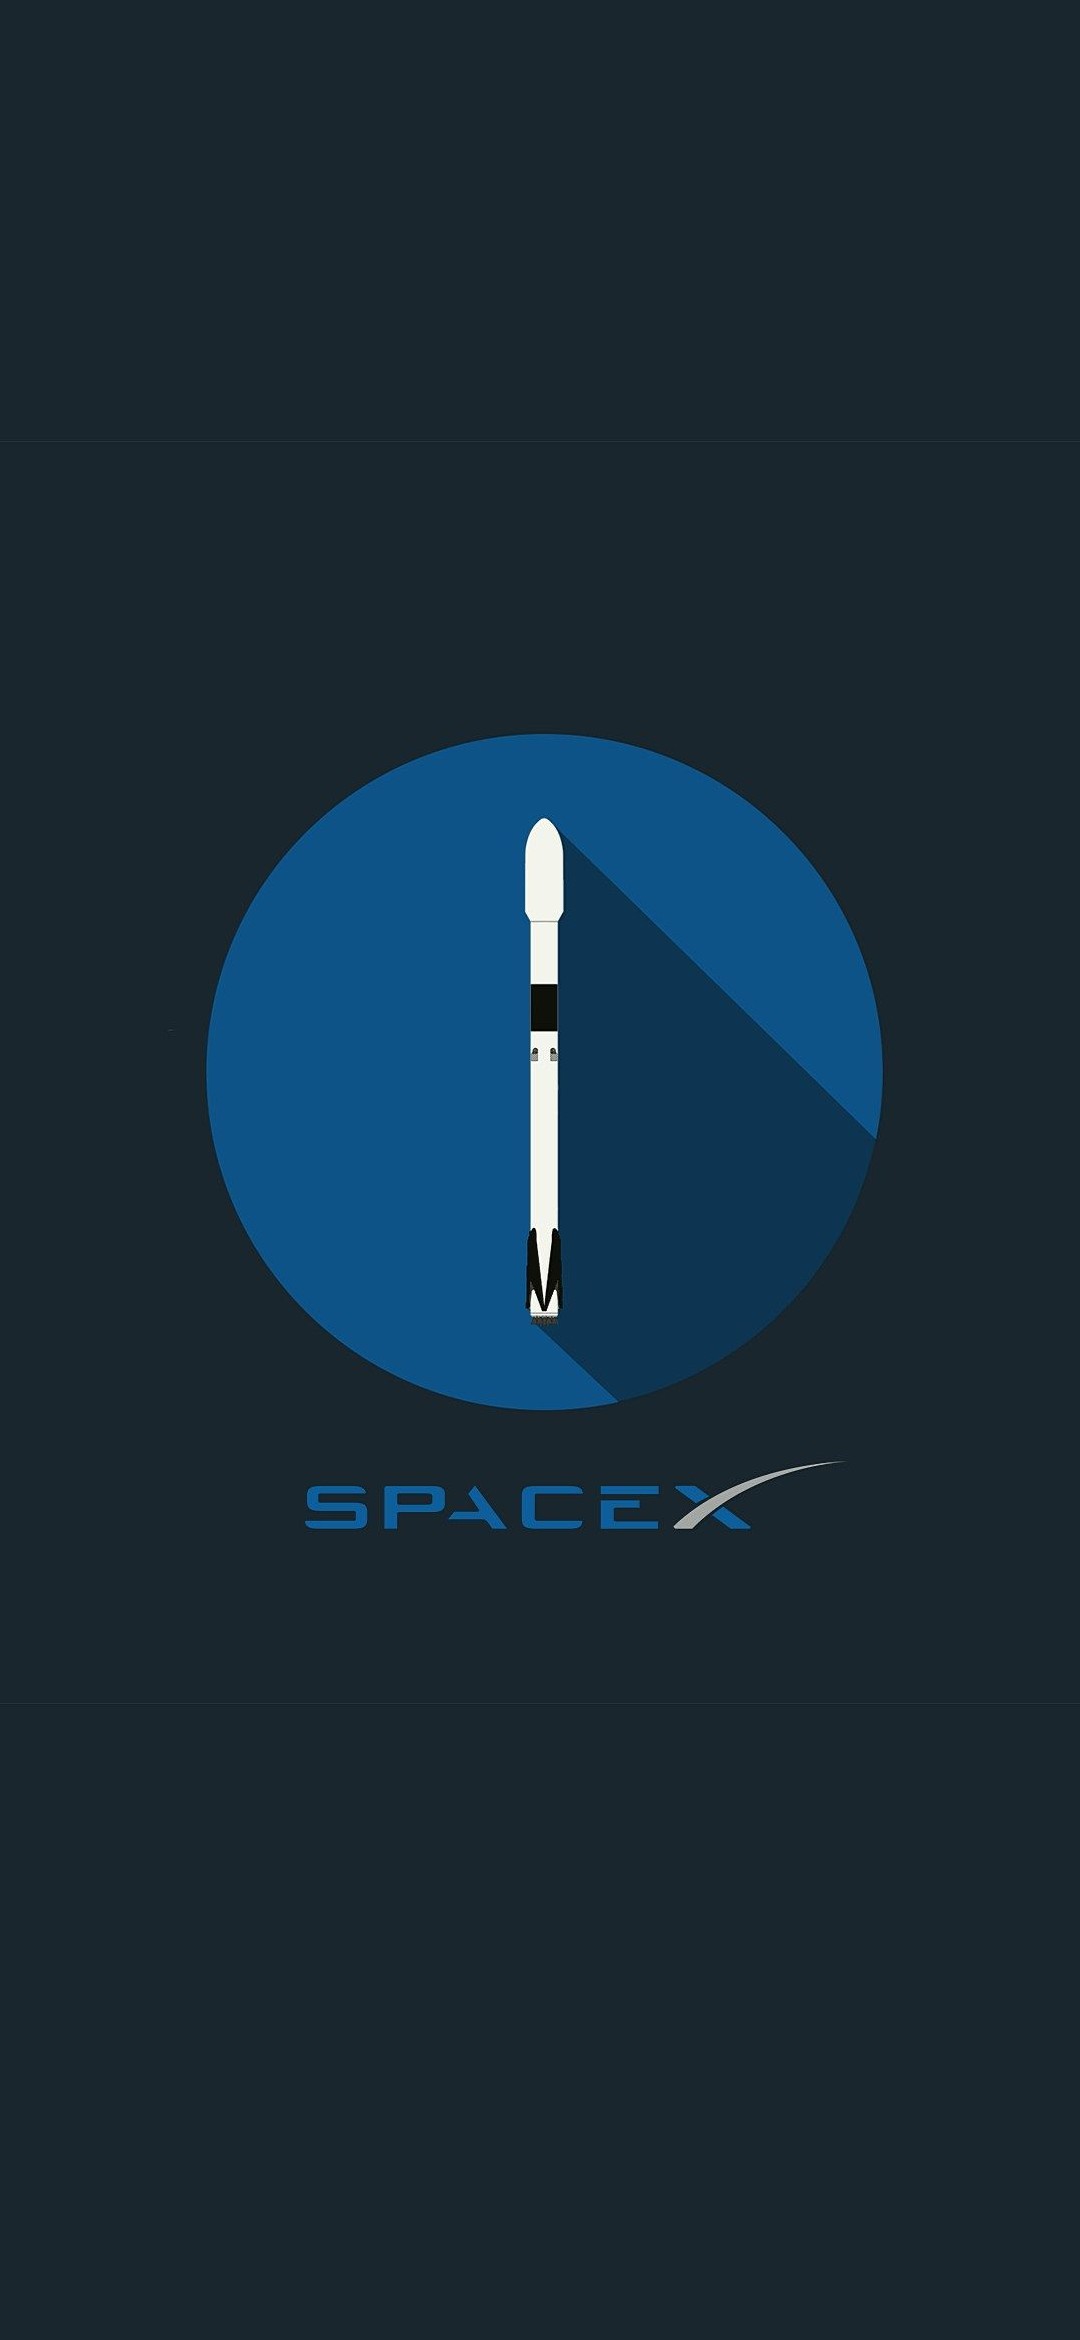 Spacex Redmagic 5 Android スマホ壁紙 待ち受け スマラン